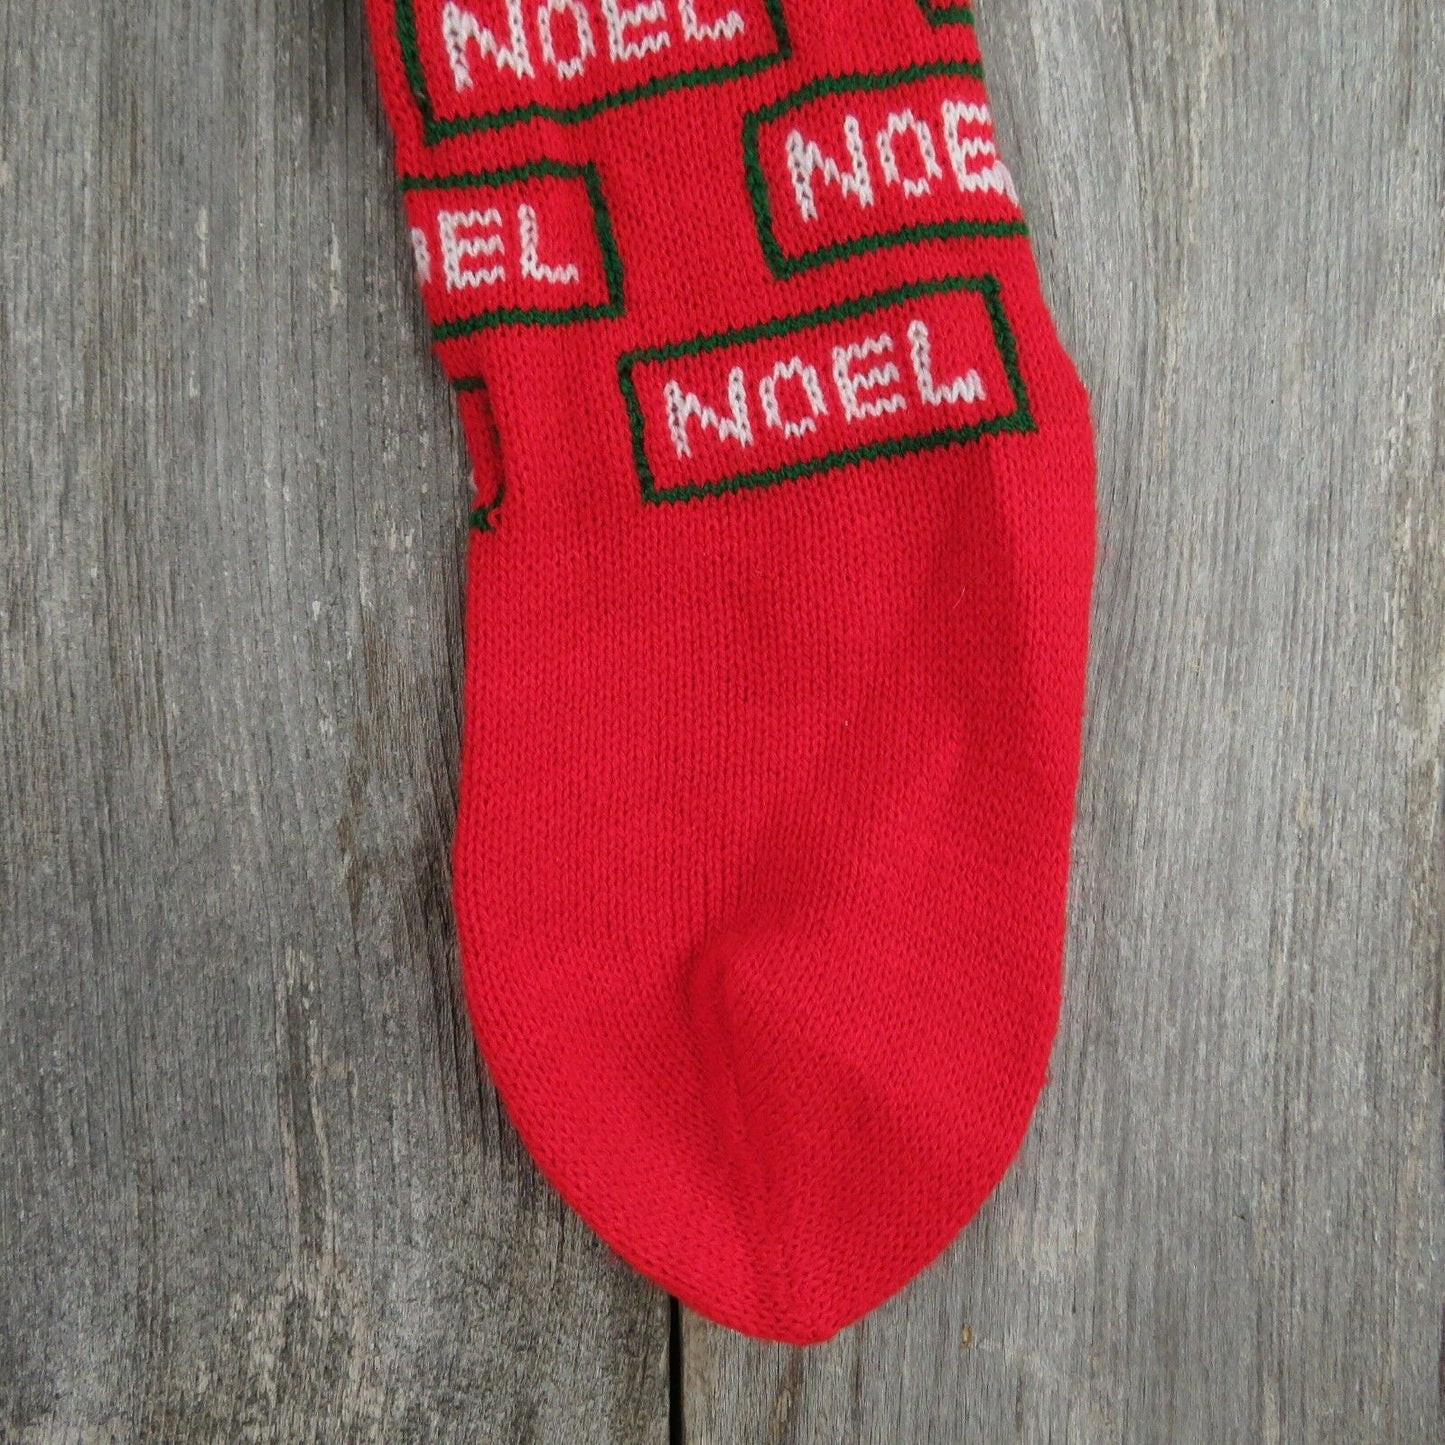 Vintage Noel Heart Stocking Christmas Knitted Knit Green Red White Pom Pom ST64 - At Grandma's Table